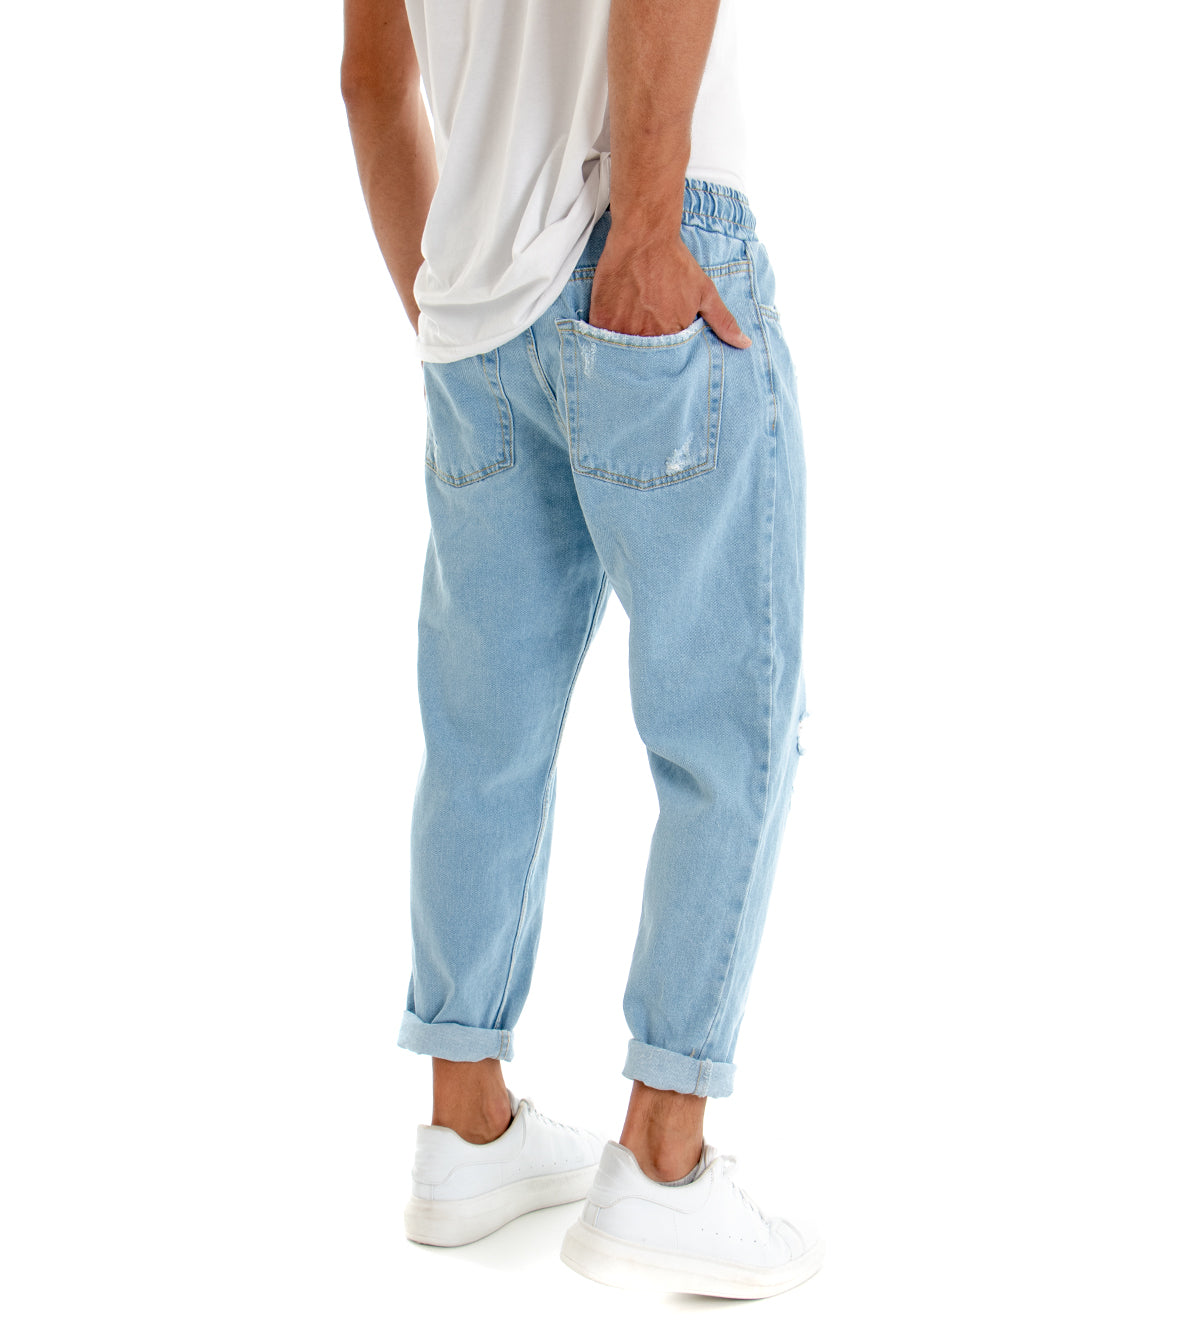 Pantaloni Uomo Jeans Denim Chiaro Rotture Loose Fit Coulisse Pantalaccio GIOSAL-P3021A